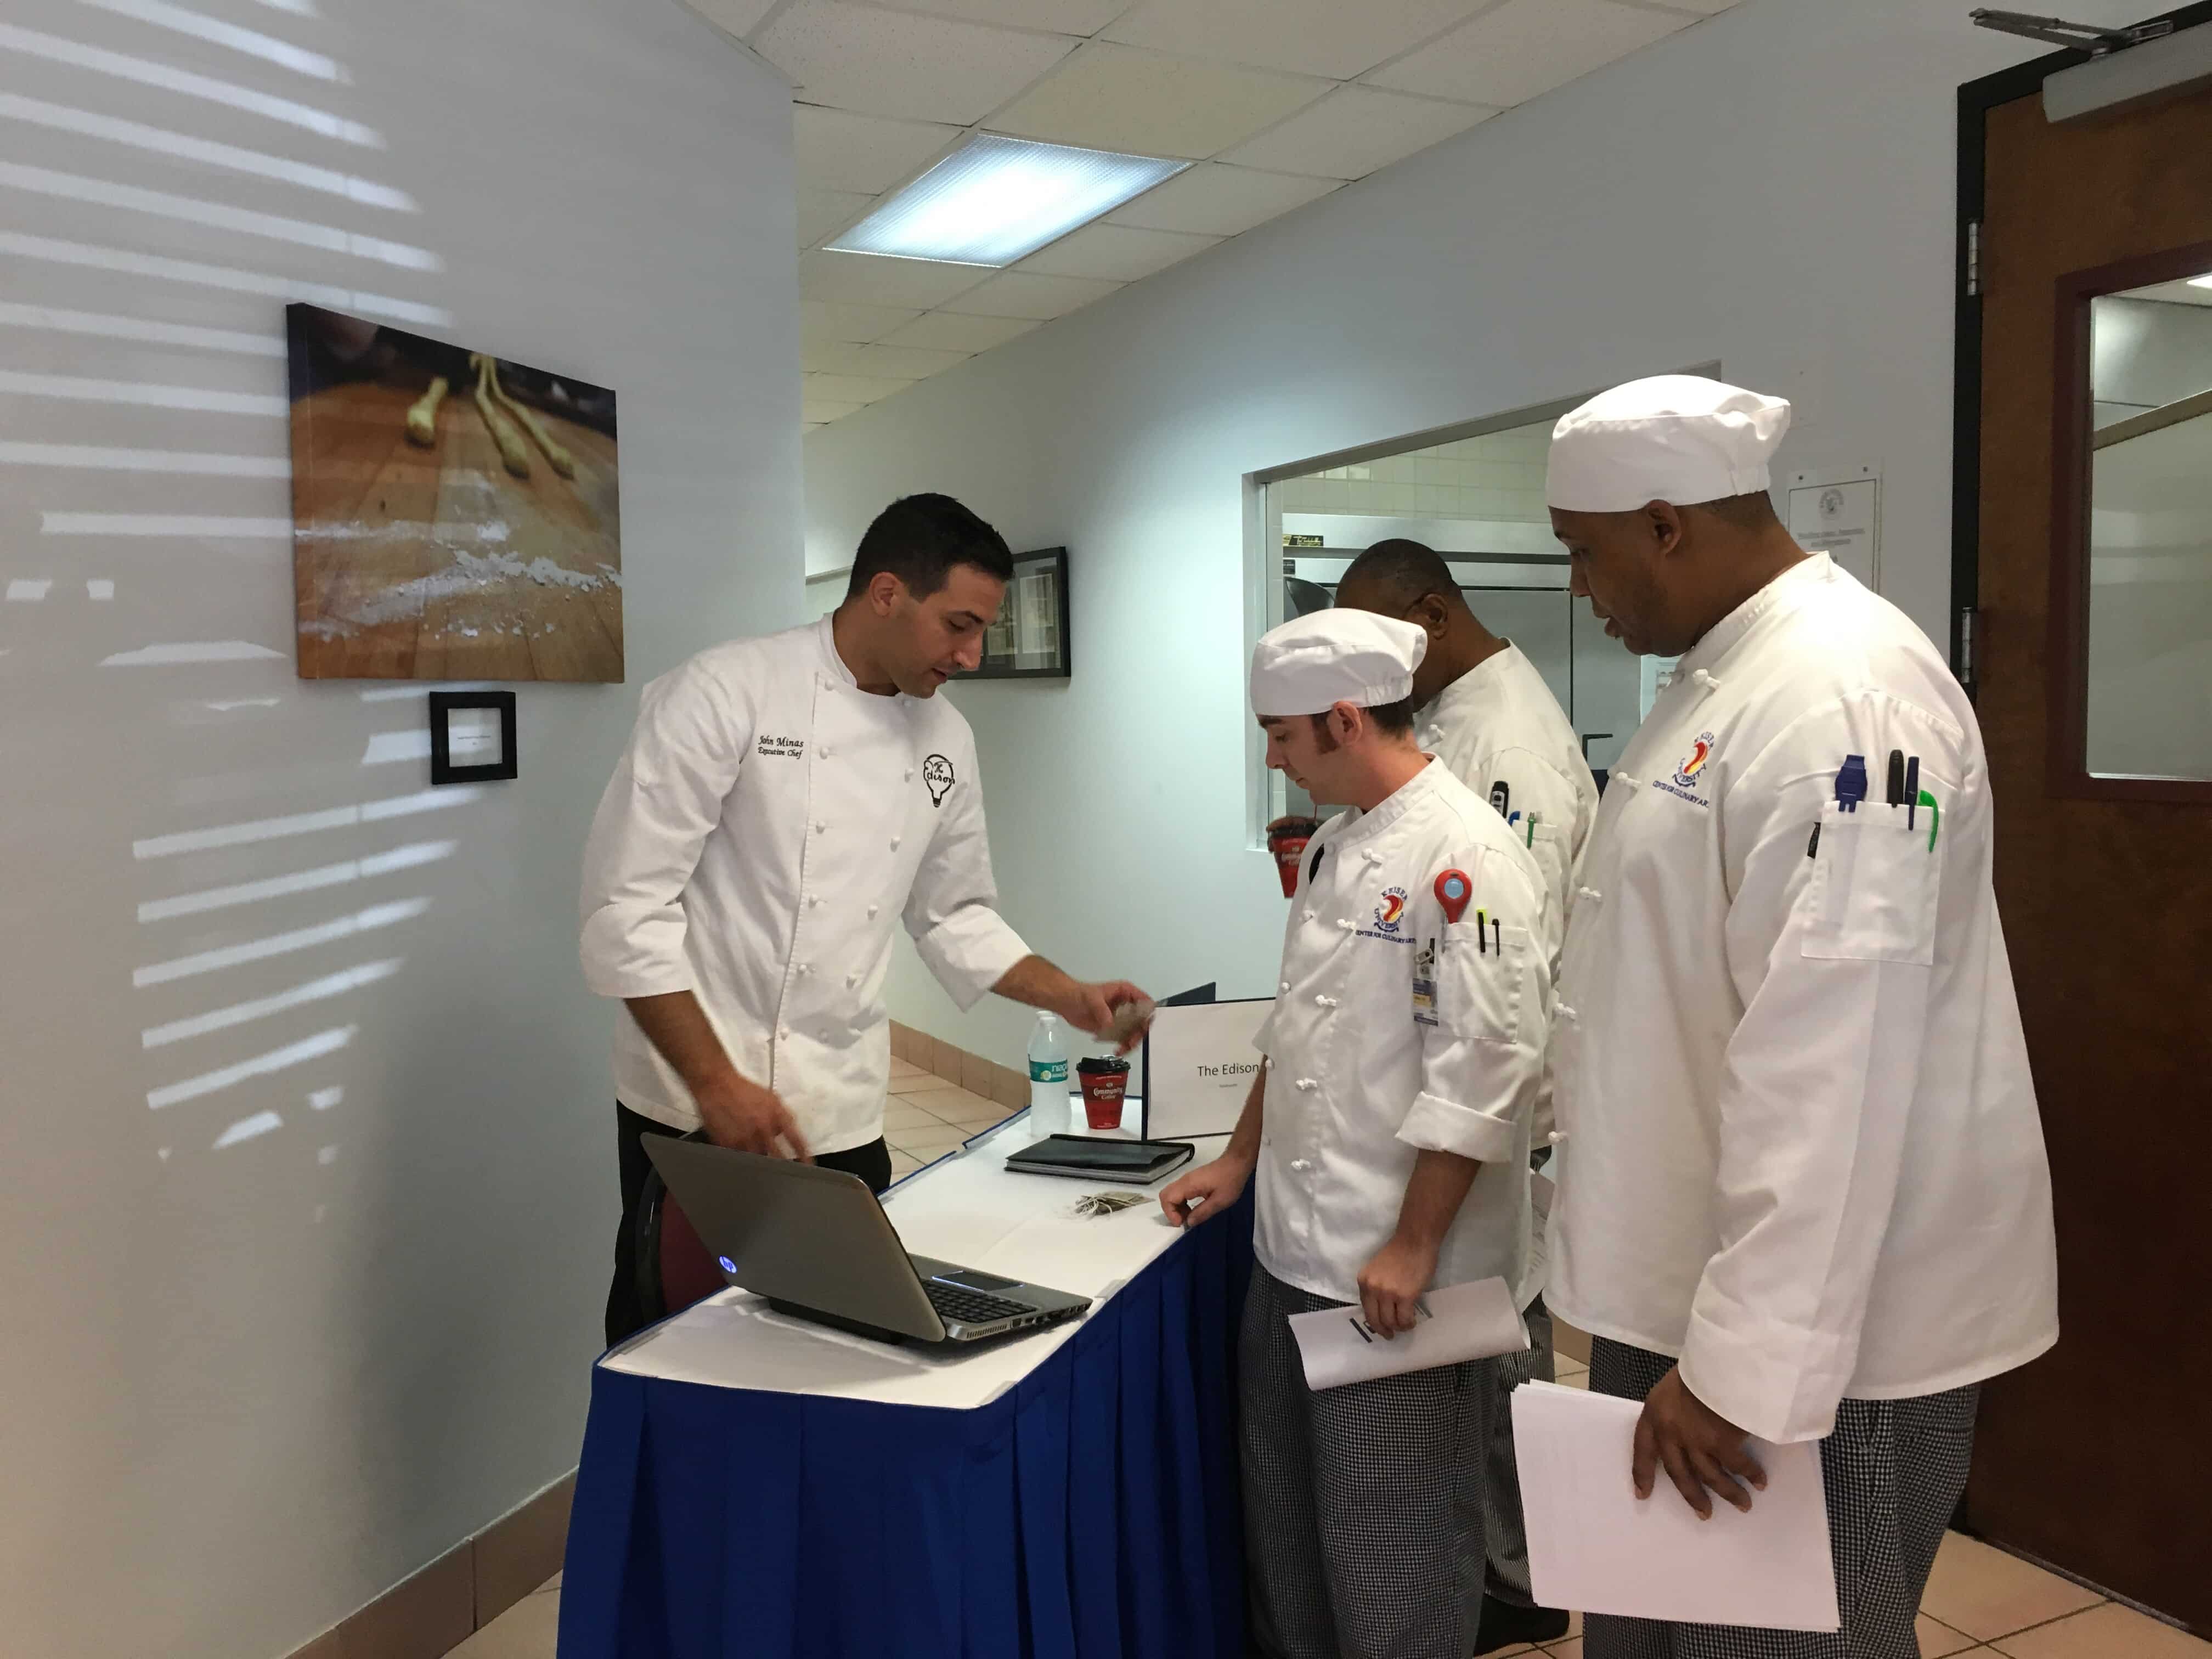 Tallahassee Culinary Arts Students Attend a Job Fair